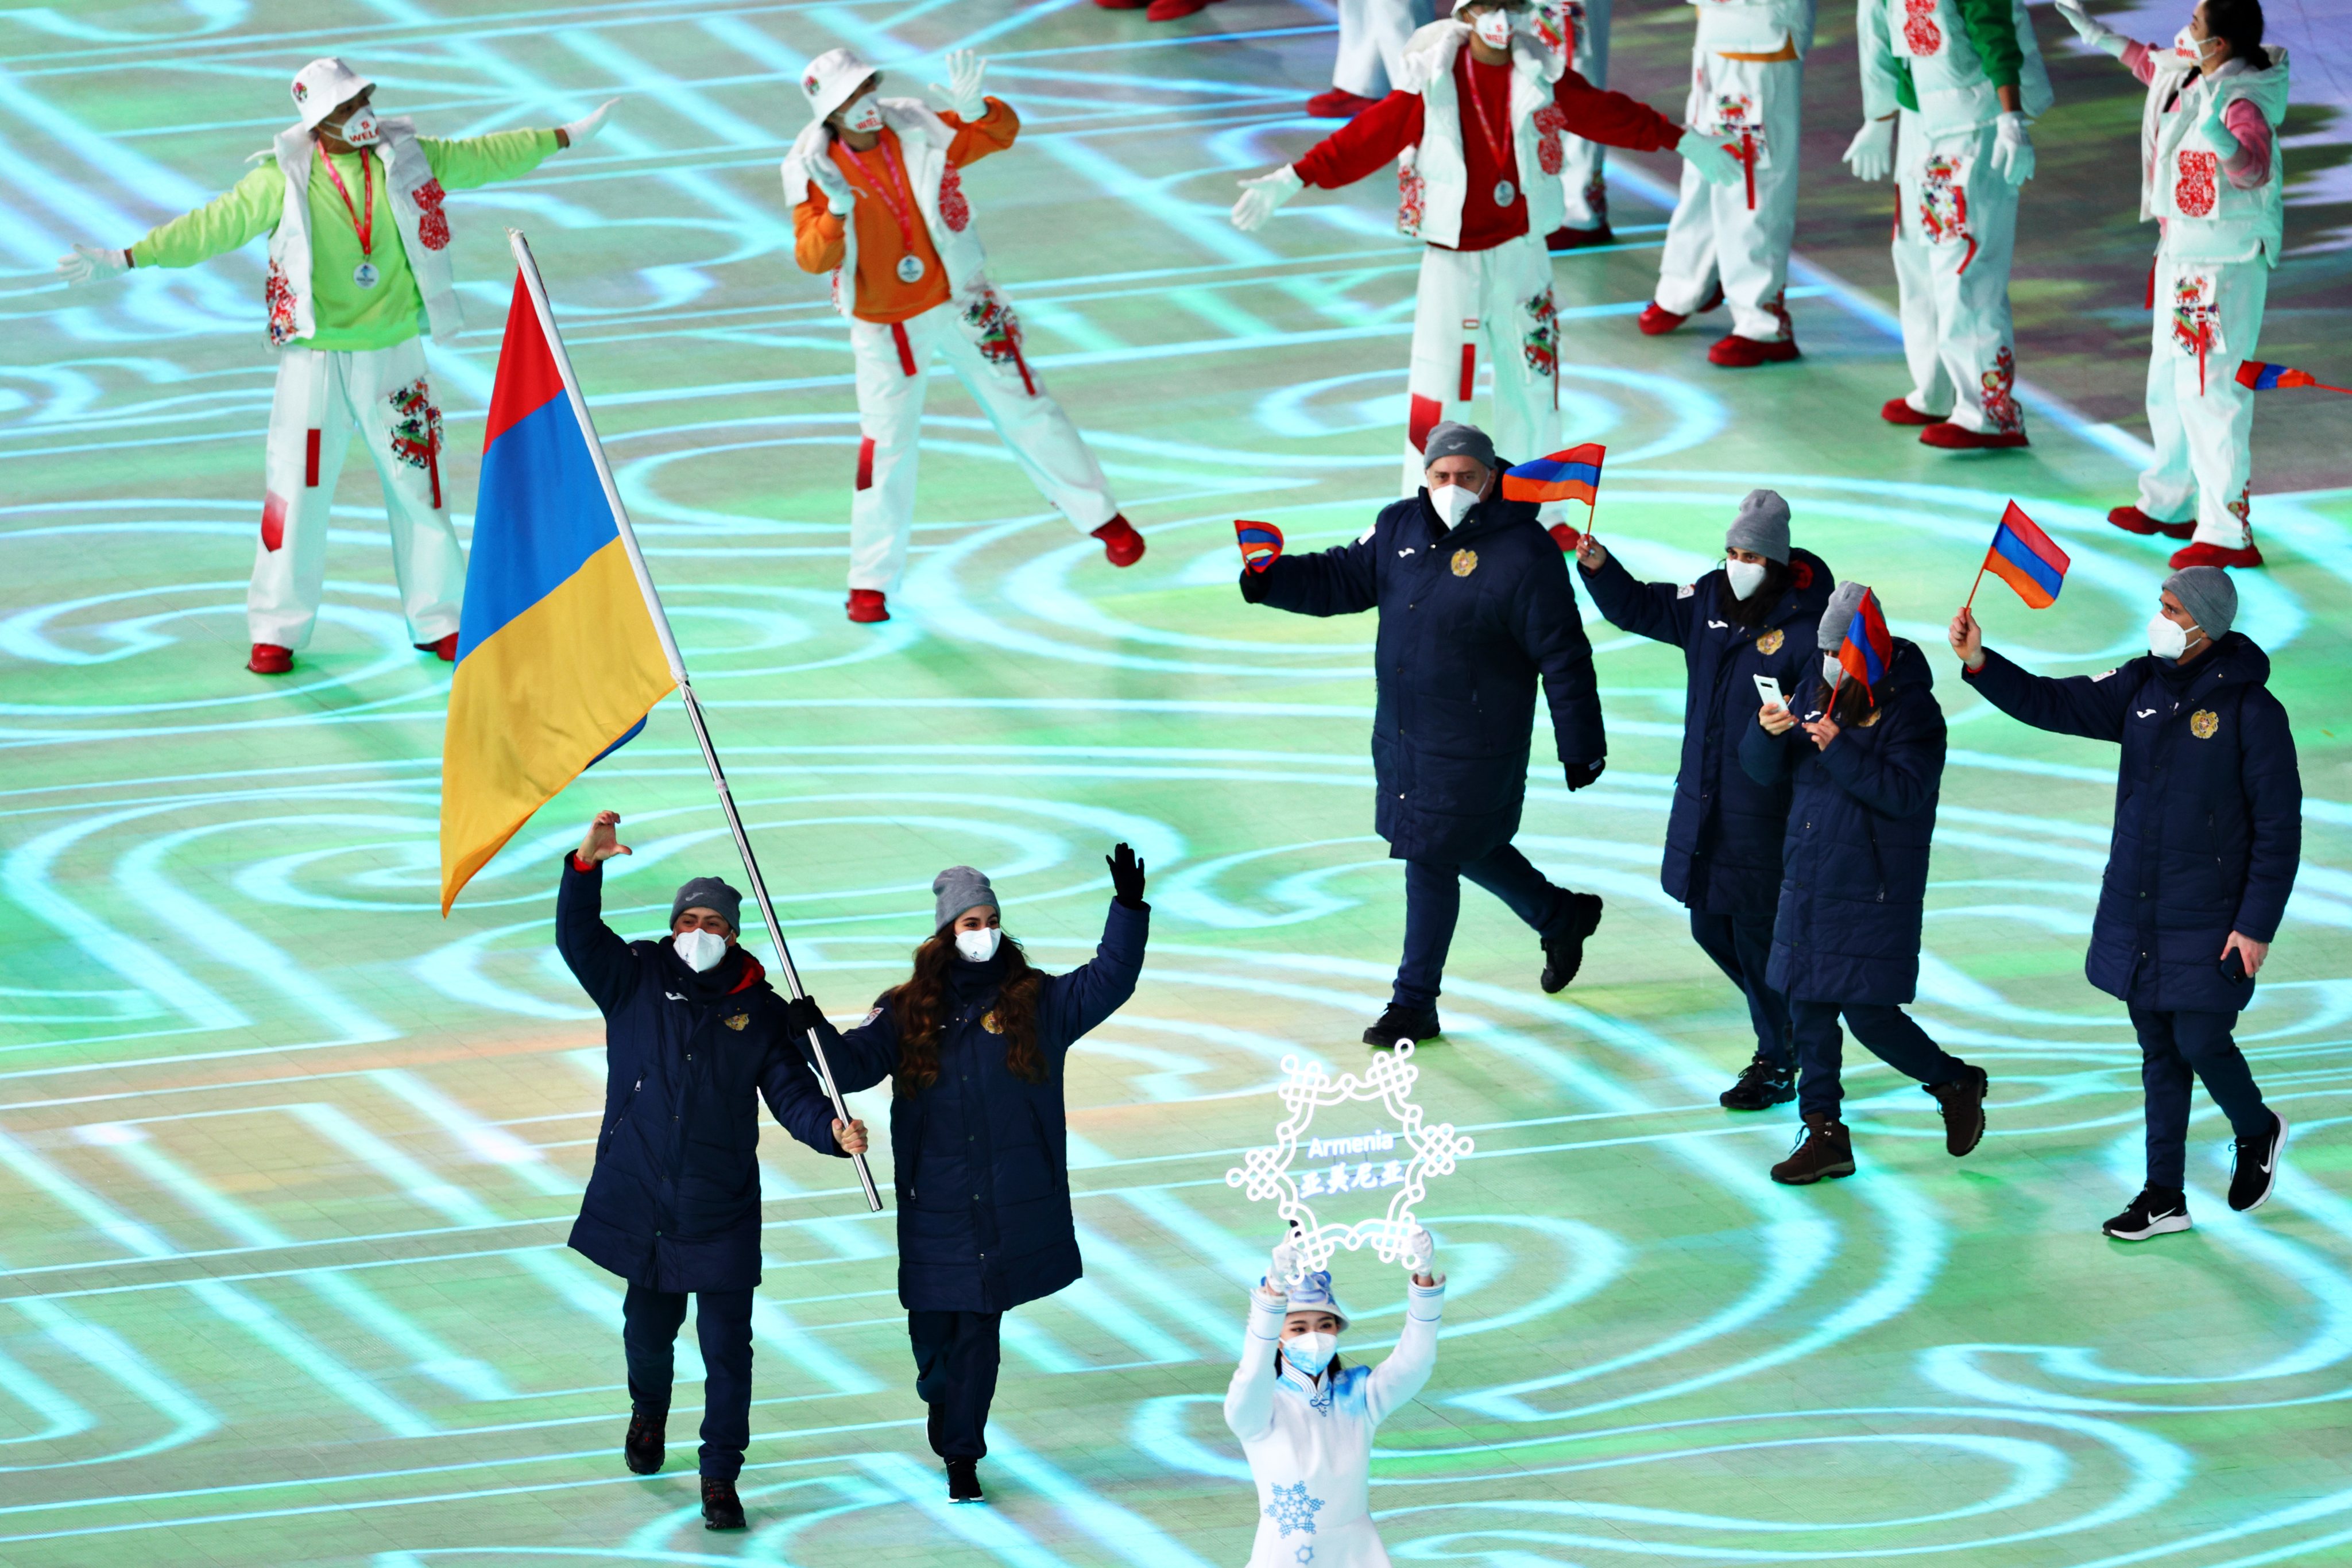 Opening Ceremony - Beijing 2022 Winter Olympics Day 0